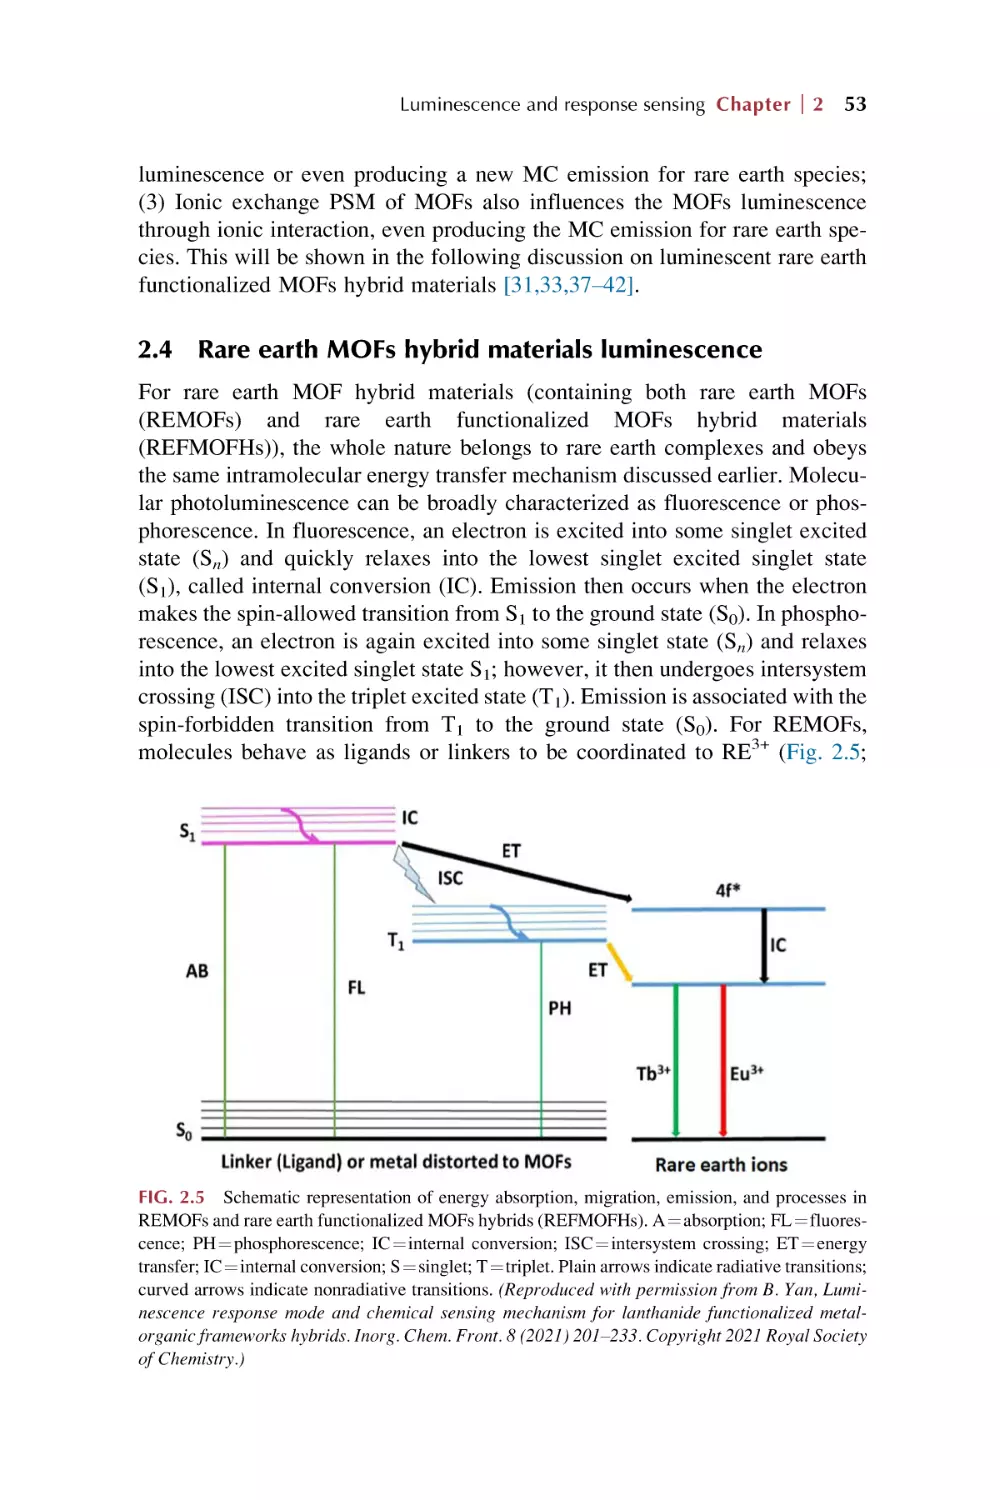 2.4. Rare earth MOFs hybrid materials luminescence